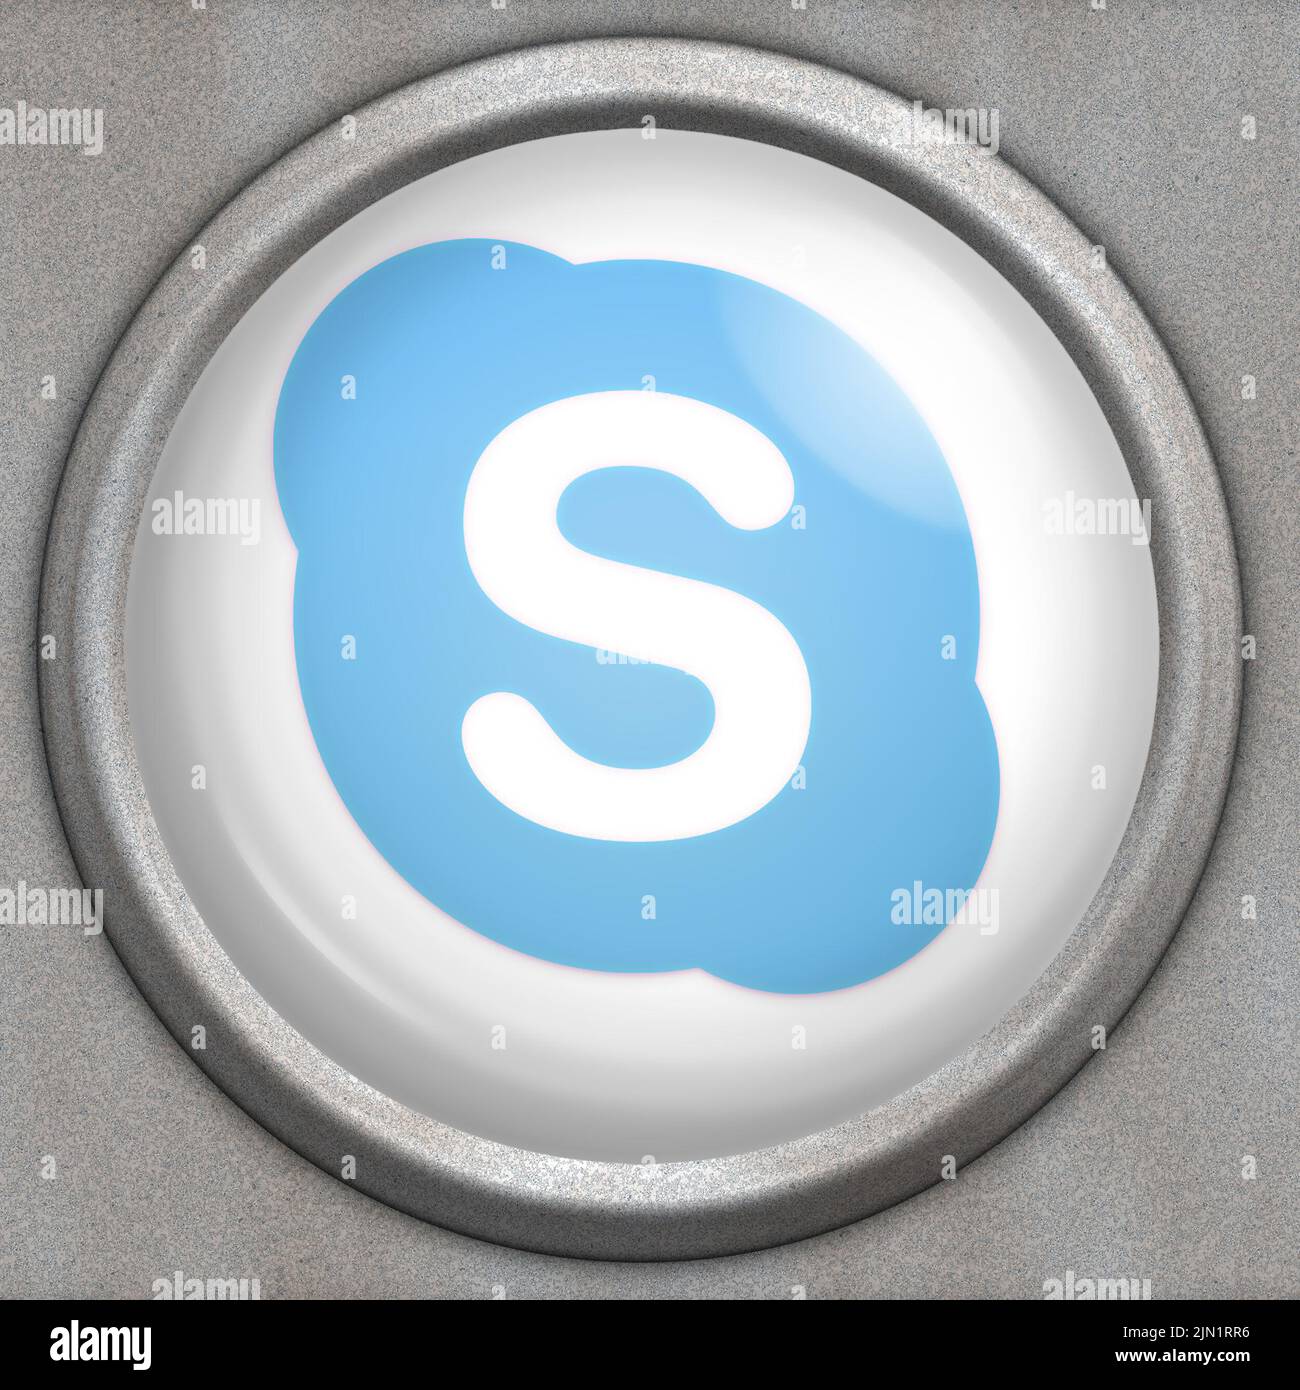 button with logo of social media service Skype Stock Photo